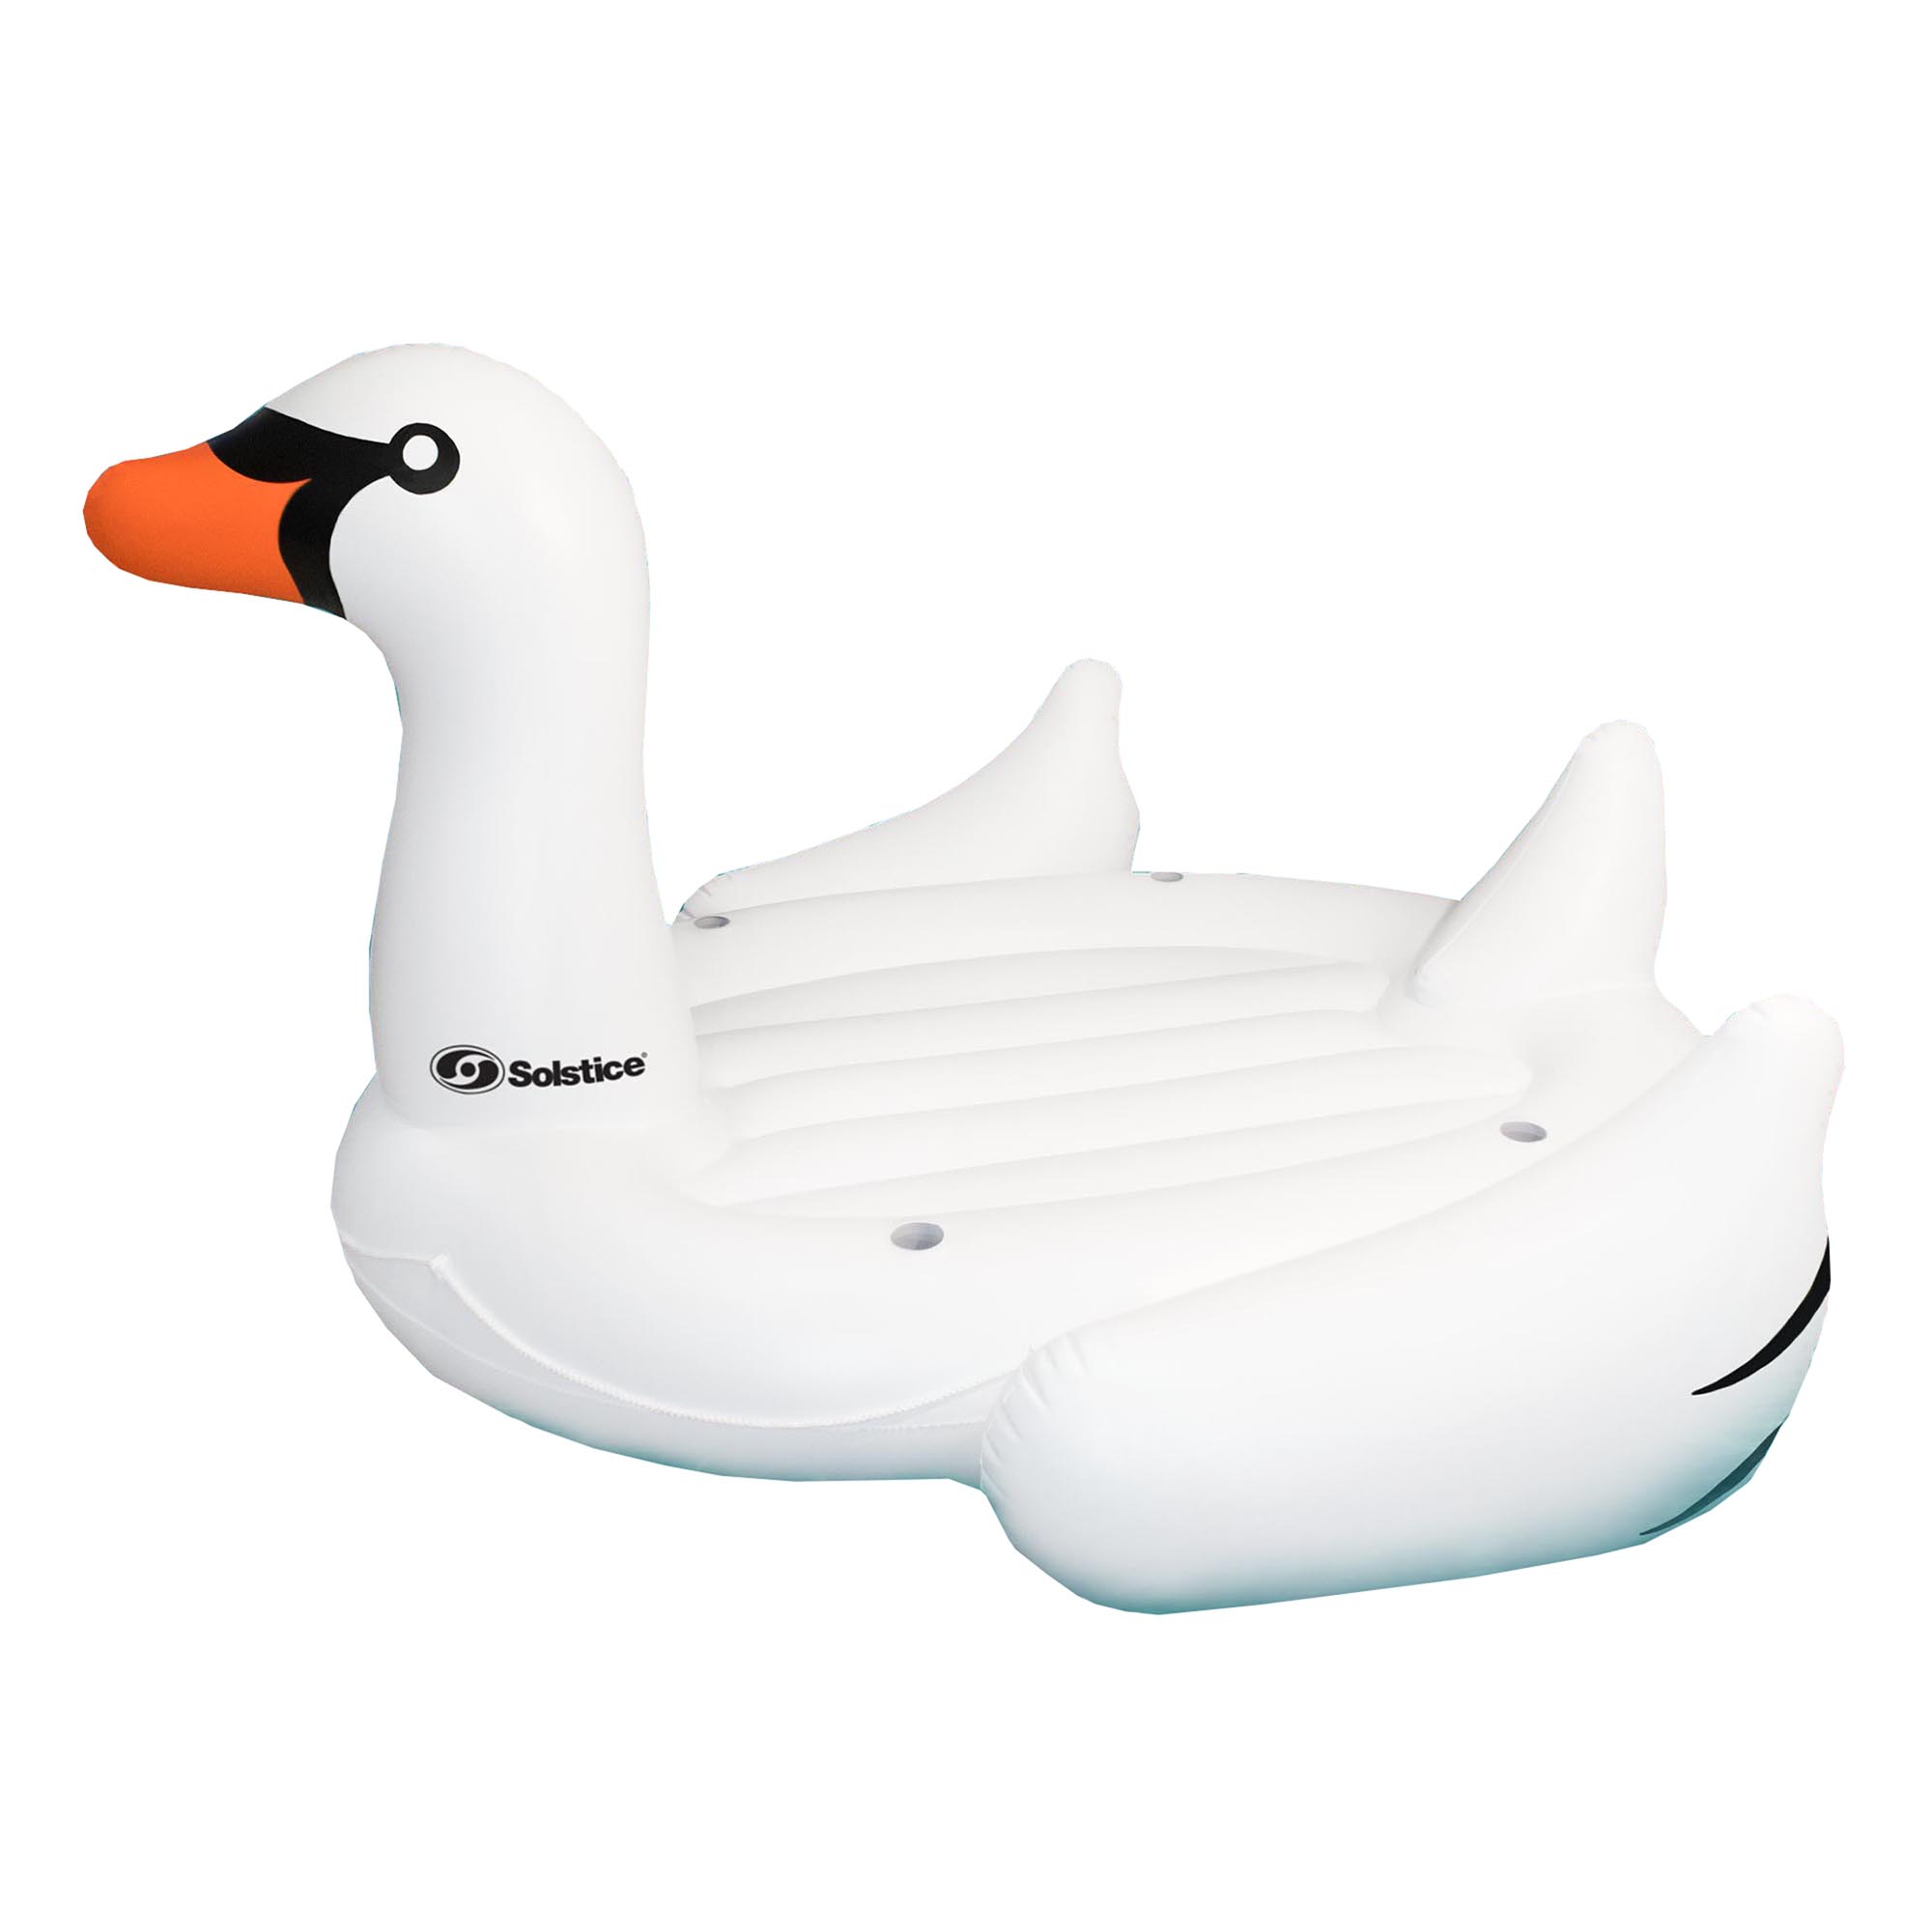 LAGO Bianco Estate Nuoto Pool Lounge Giant Ride On GIOCATTOLO GALLEGGIANTE GONFIABILE Swan 